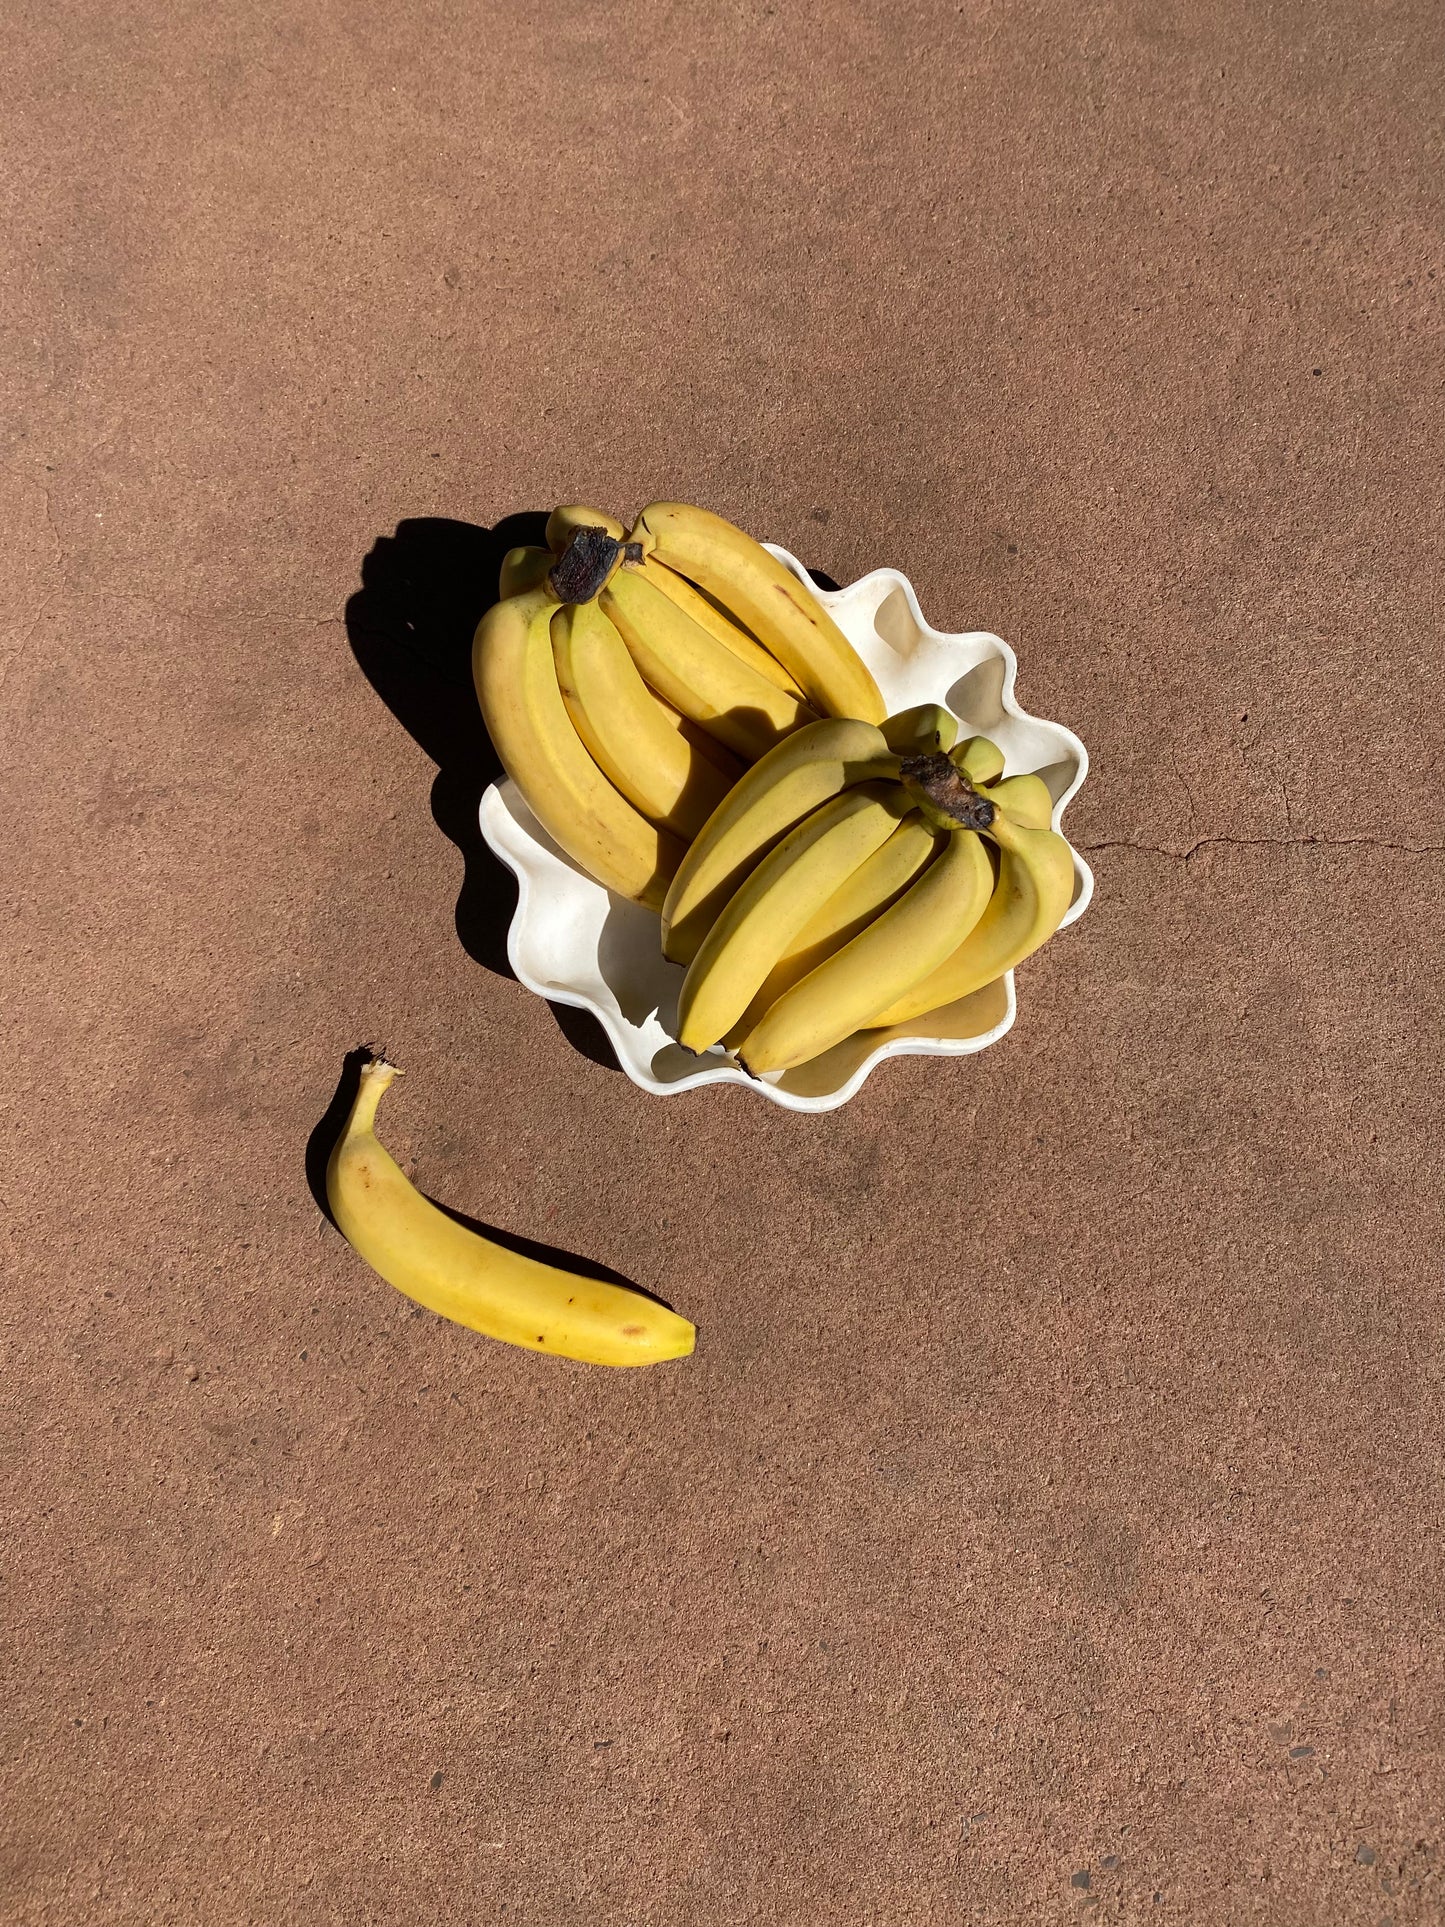 Bananas Local